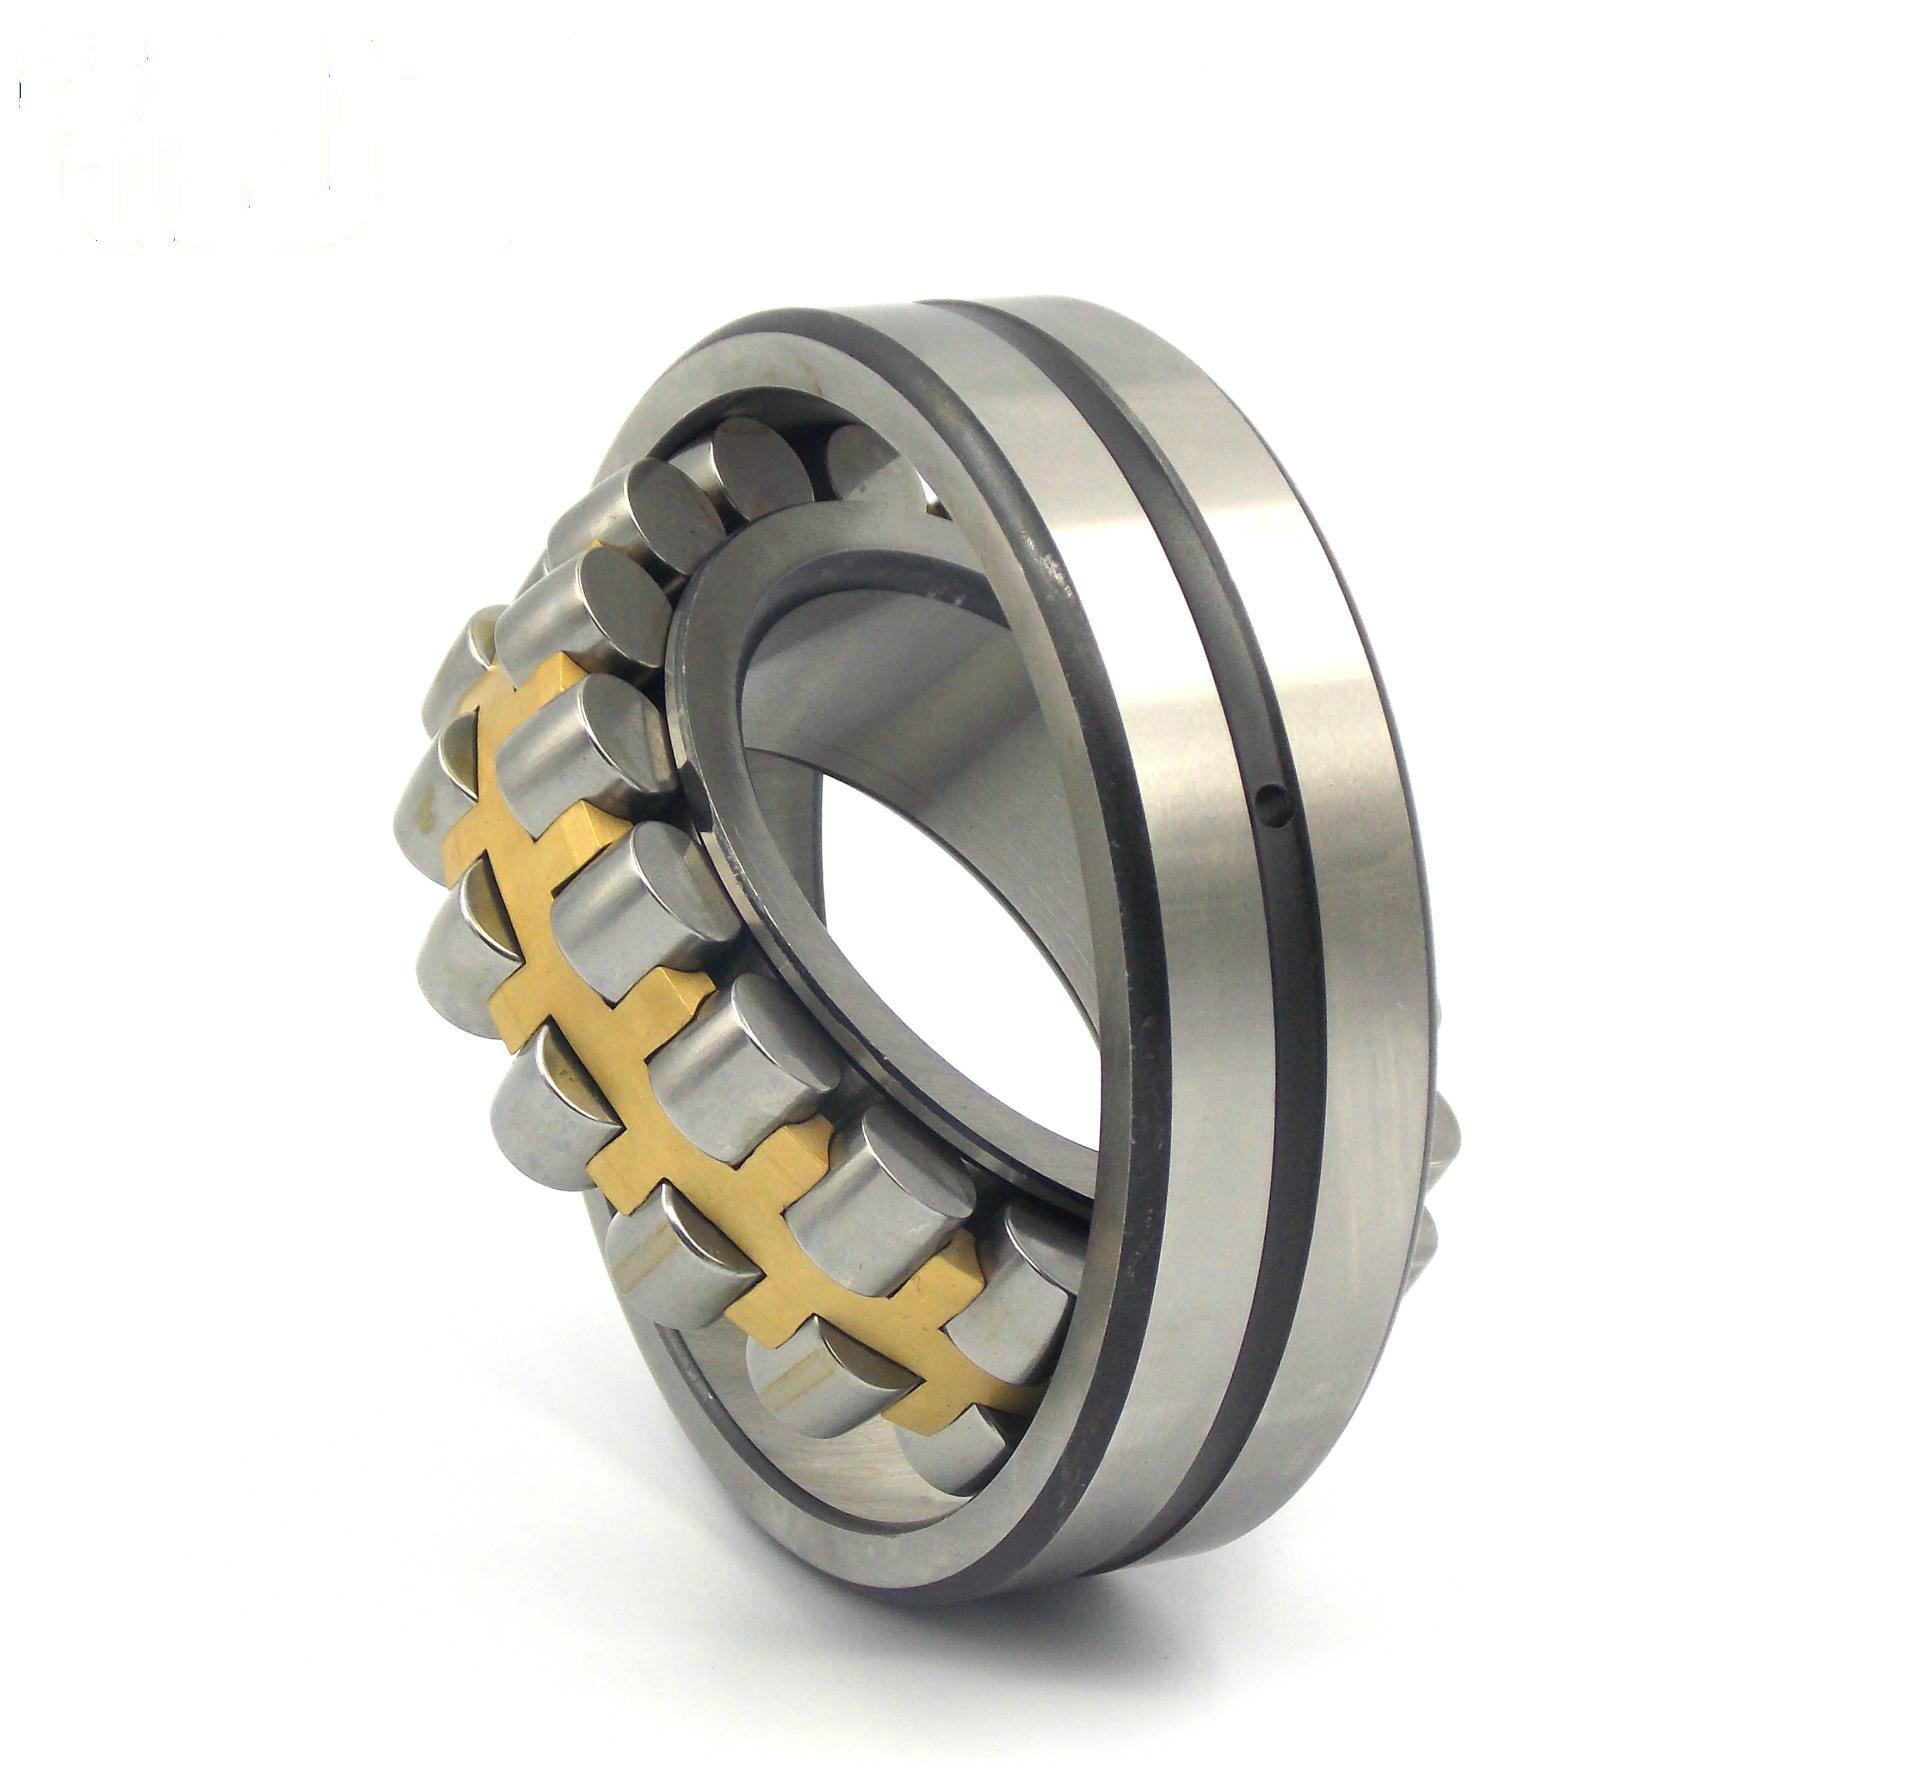  NJ 2320 J Cylindrical roller bearing